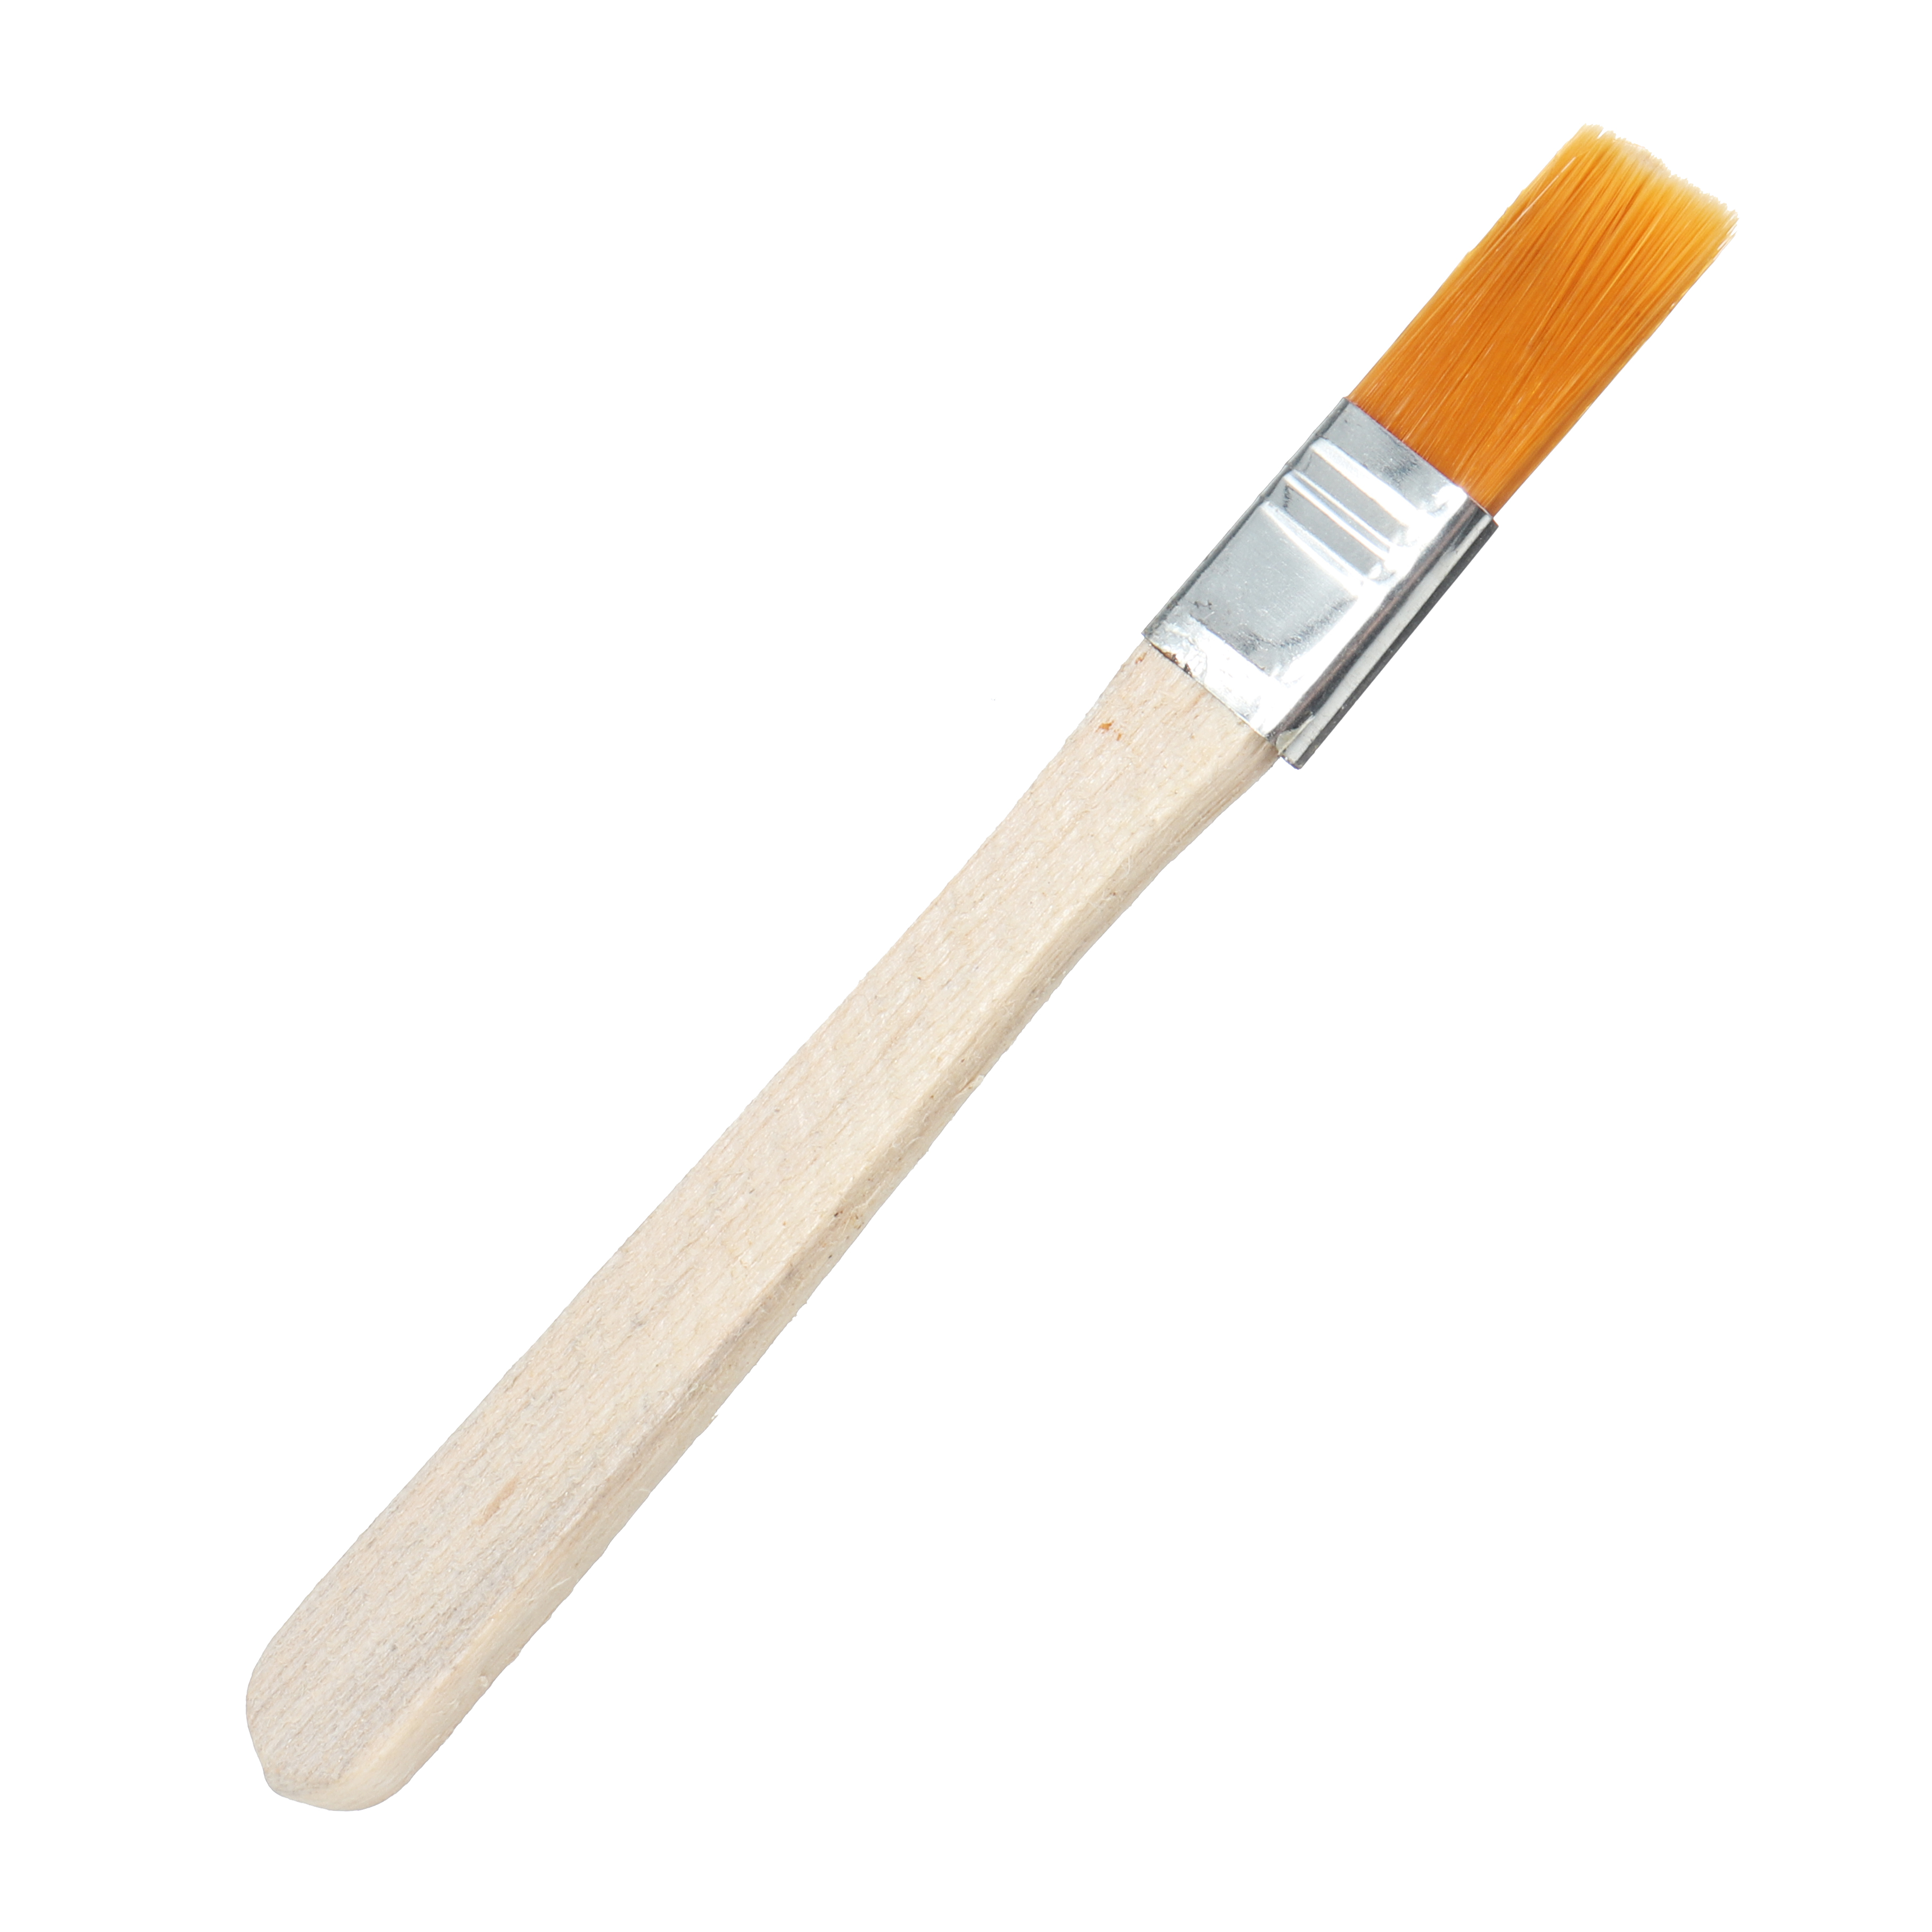 Nylon-Cleaning-Brush-DIY-Handmade-Sand-Table-Construction-Model-tool-Brushes-1491171-2